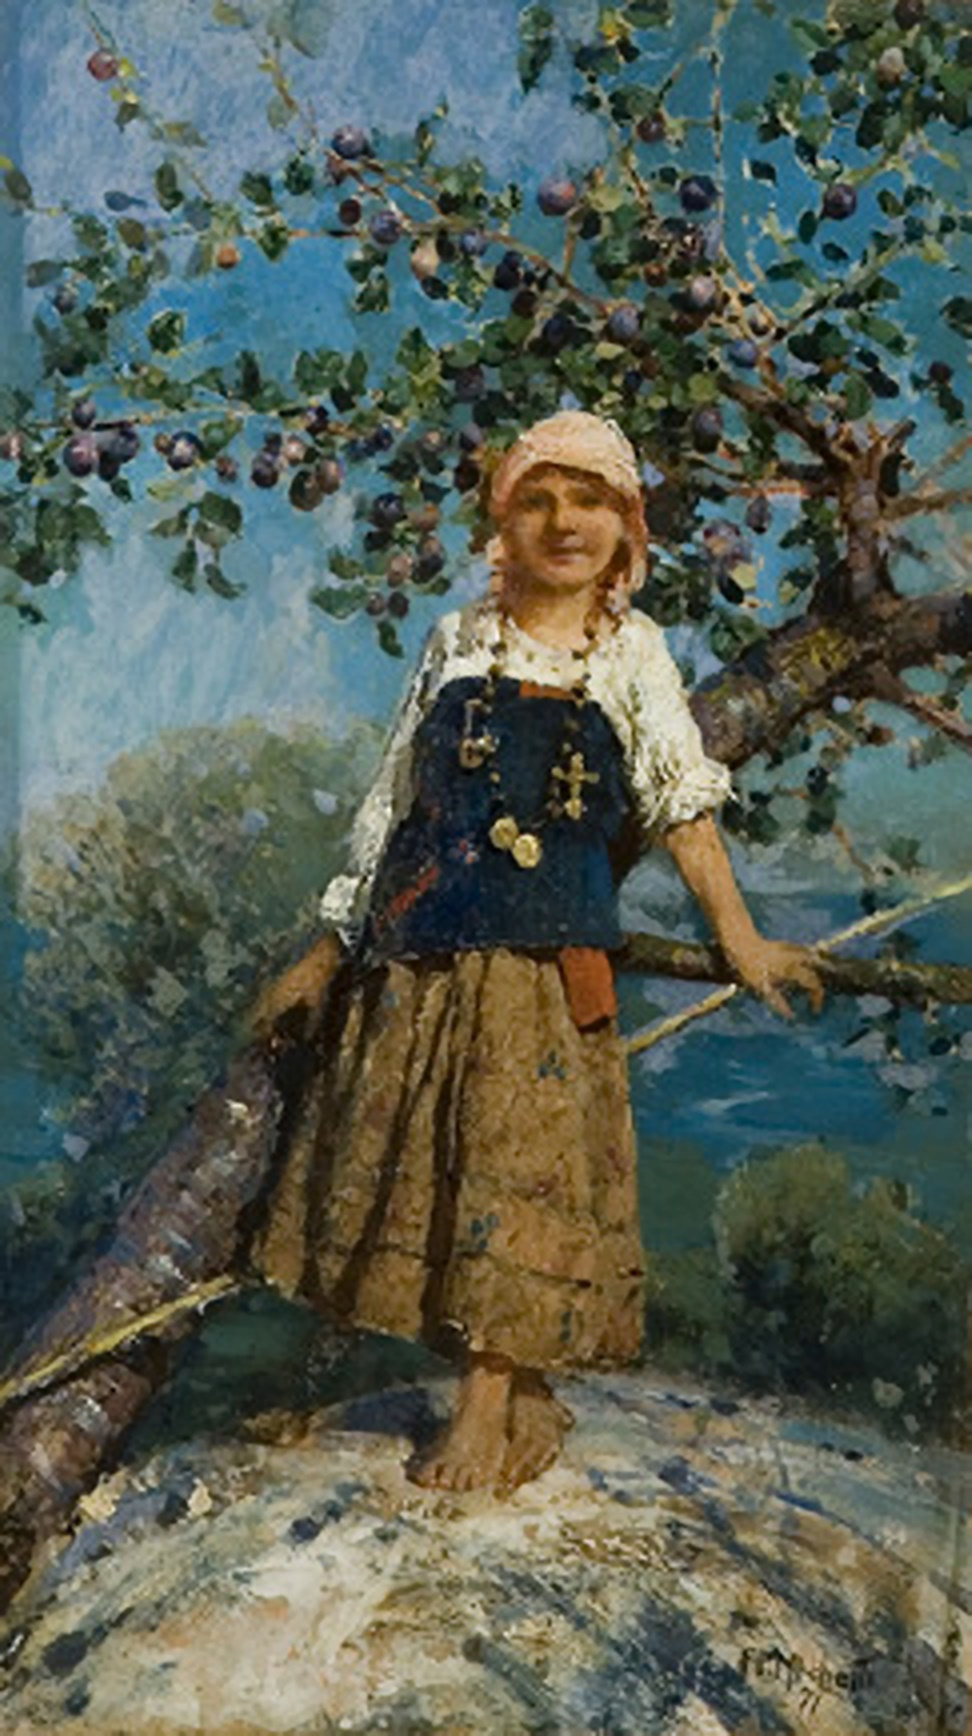 Francesco Paolo Michetti. Shepherdess under the plum tree, near the coast